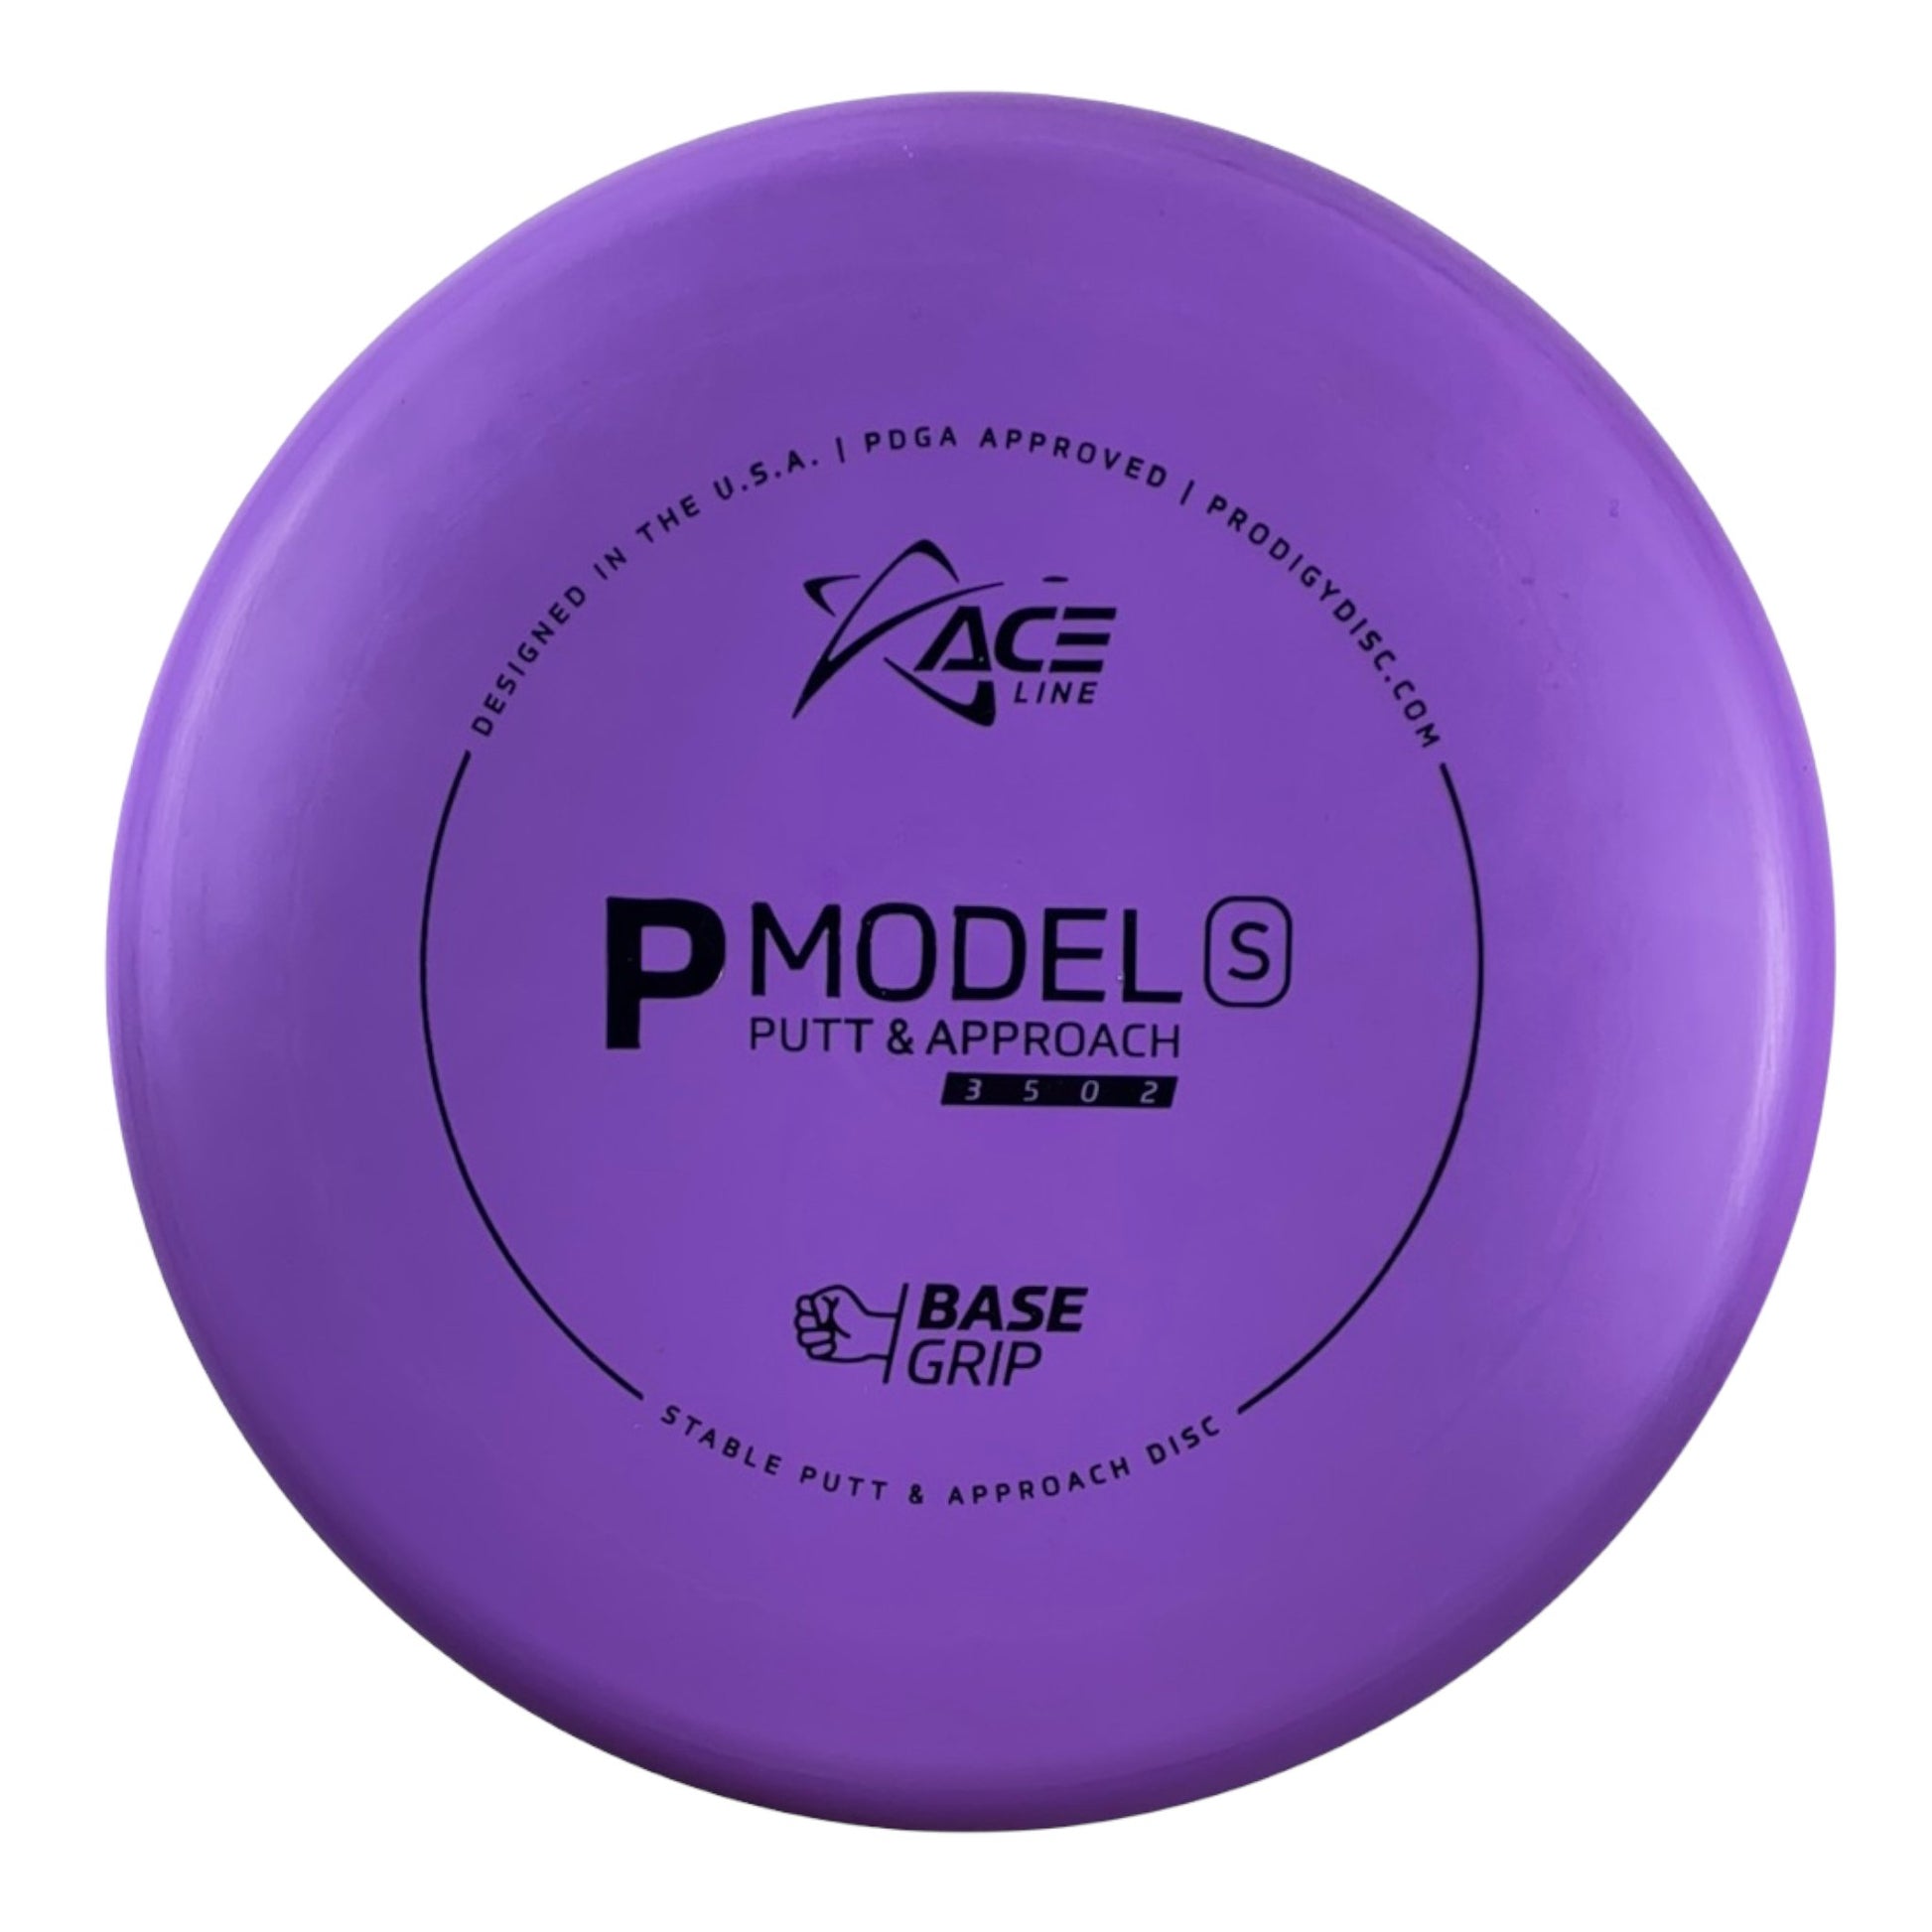 Prodigy Disc P Model S | Base Grip | Purple/Black 174g Disc Golf